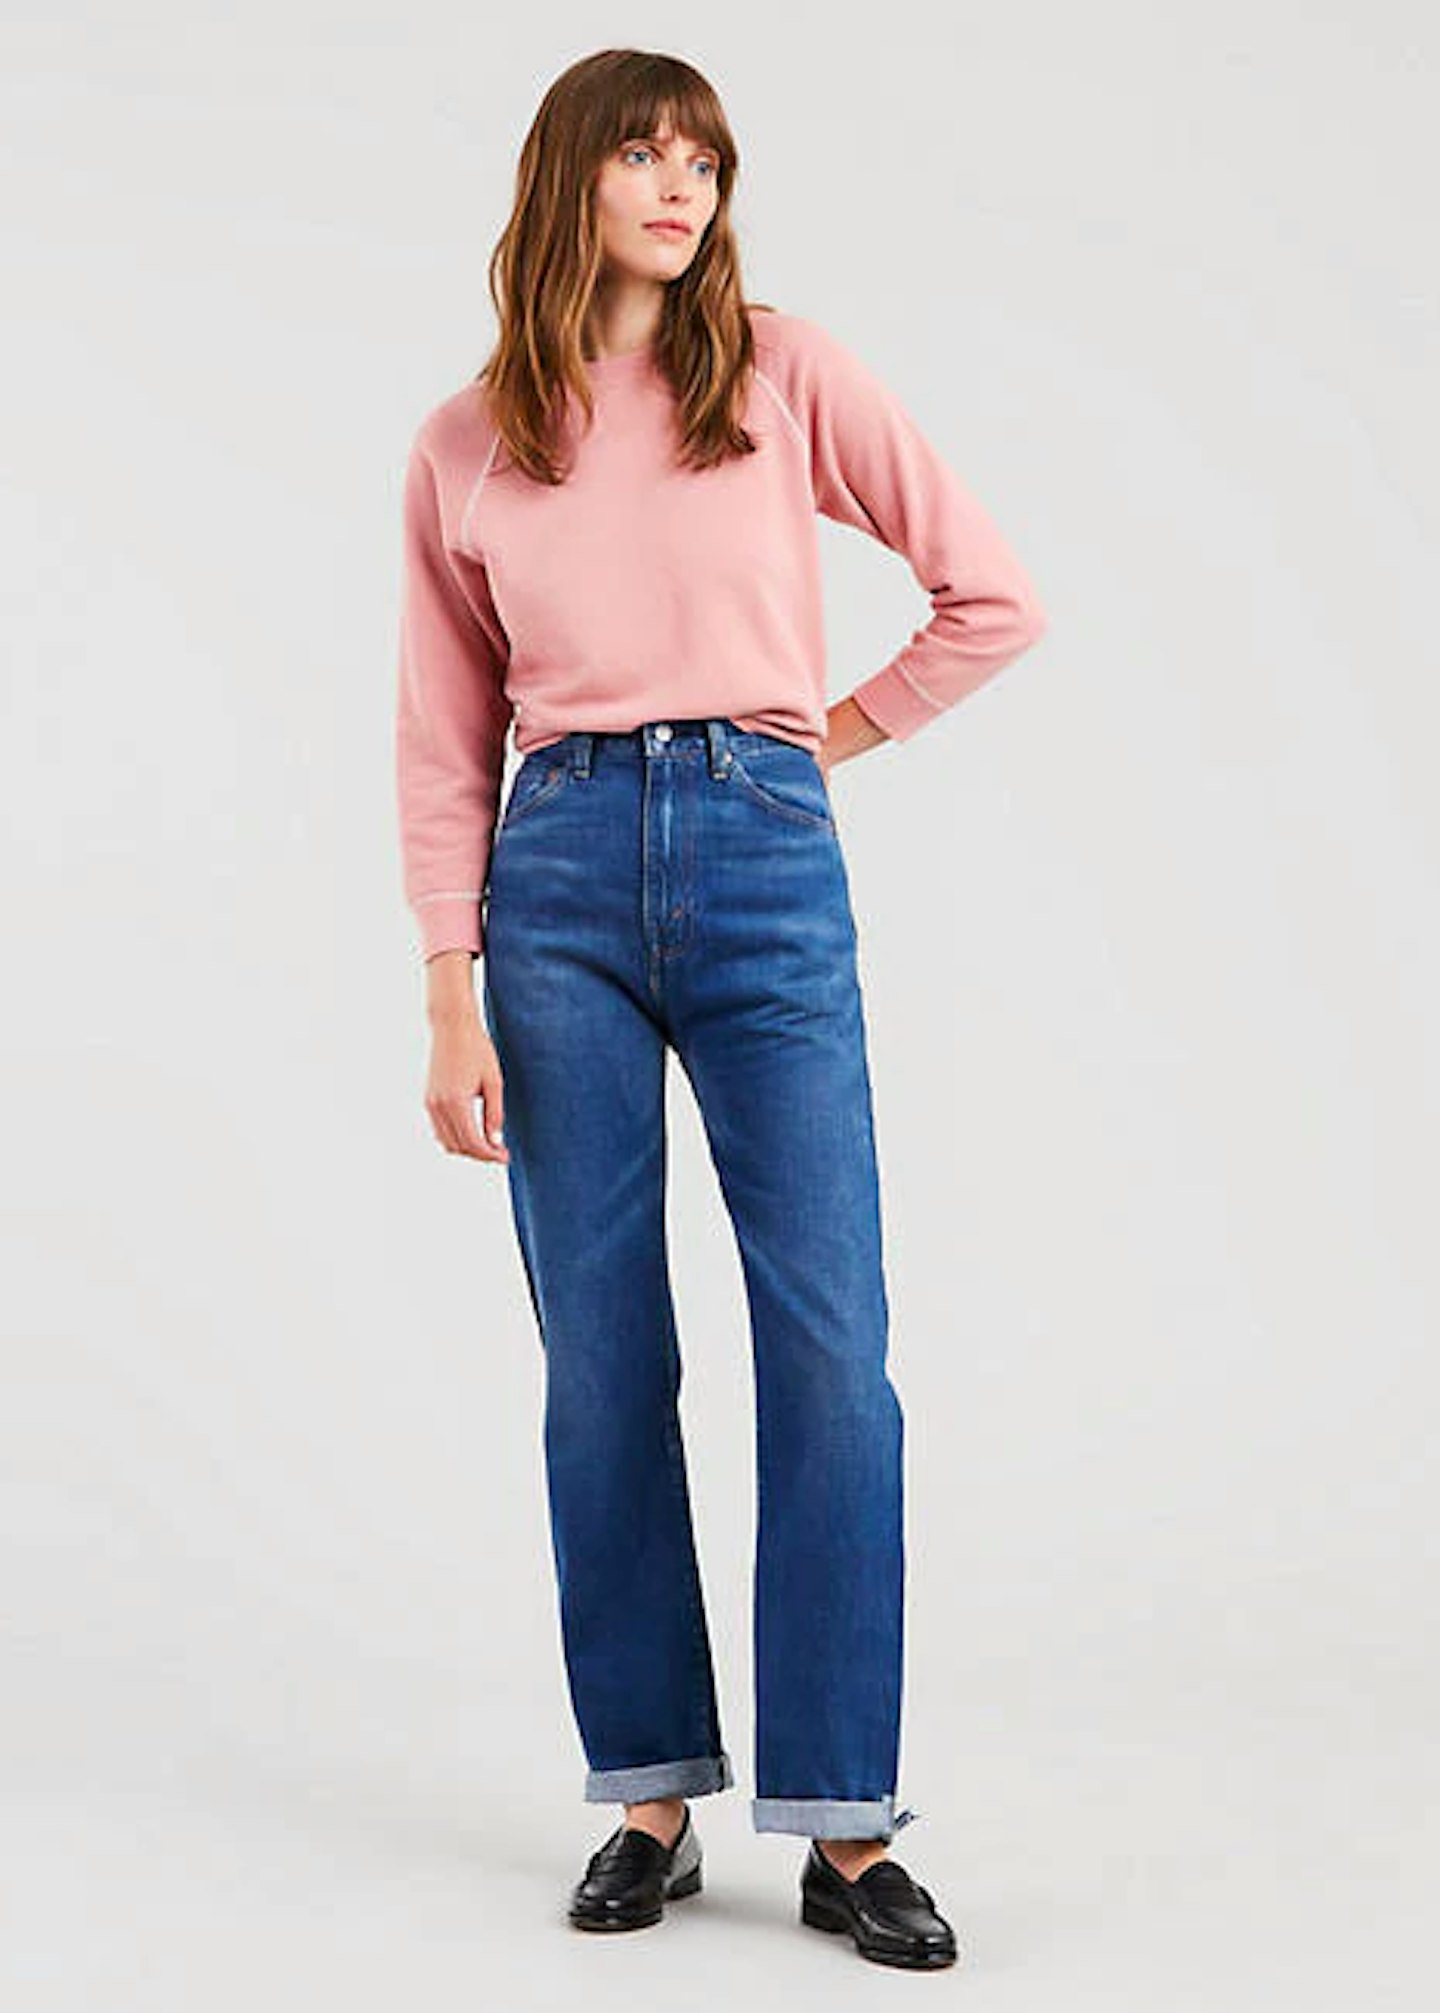 denim jeans trends autumn winter 2018 aw18 - grazia